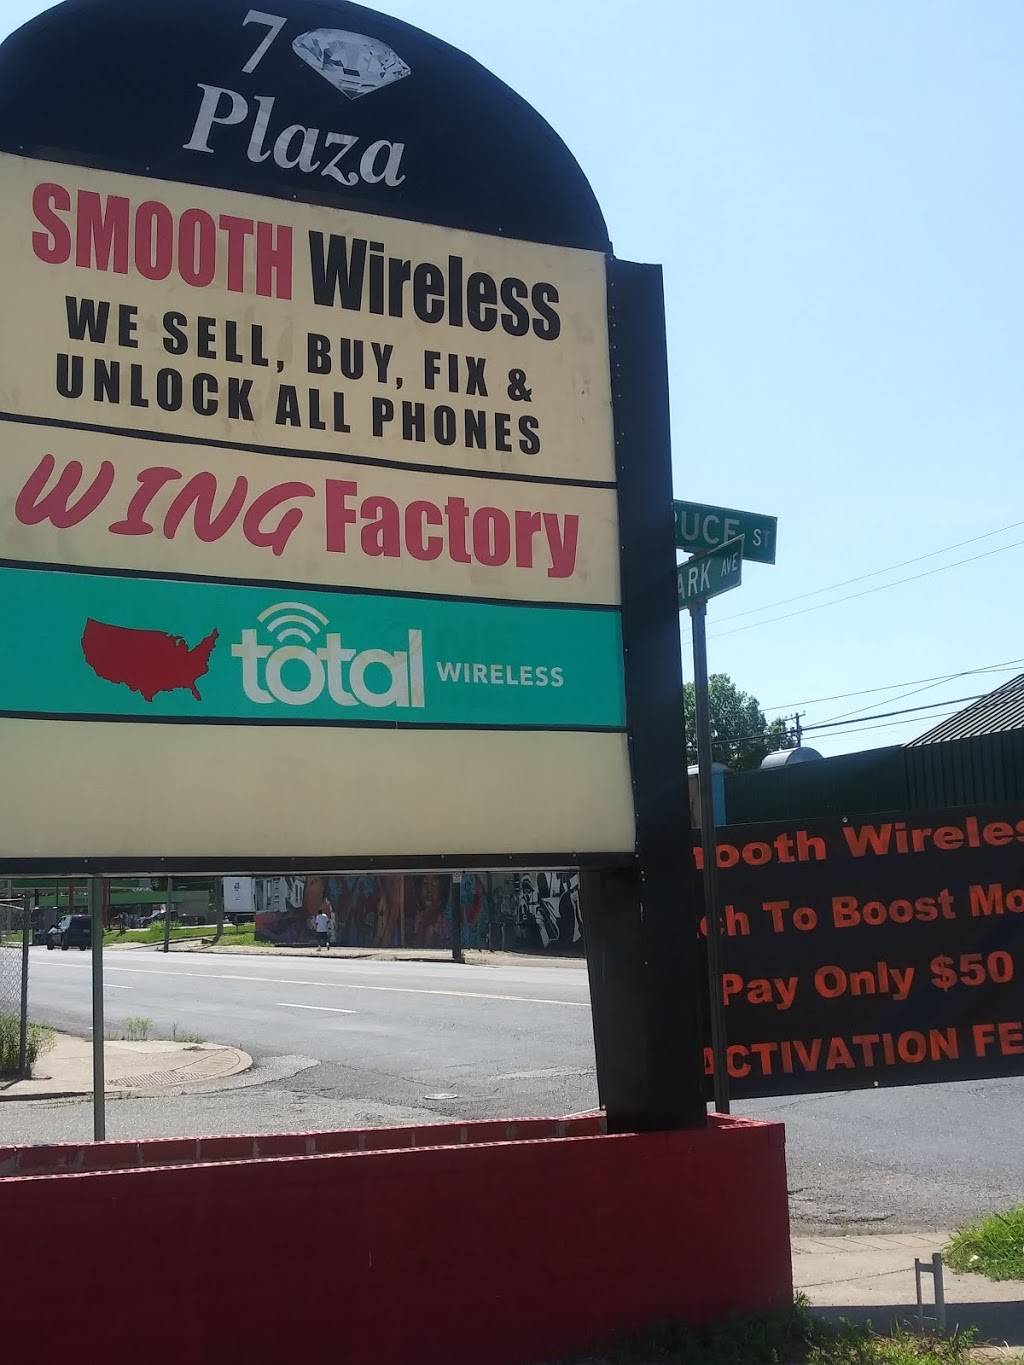 Smooth Wireless - 2282 Park Ave, Memphis, TN 38114, USA - BusinessYab